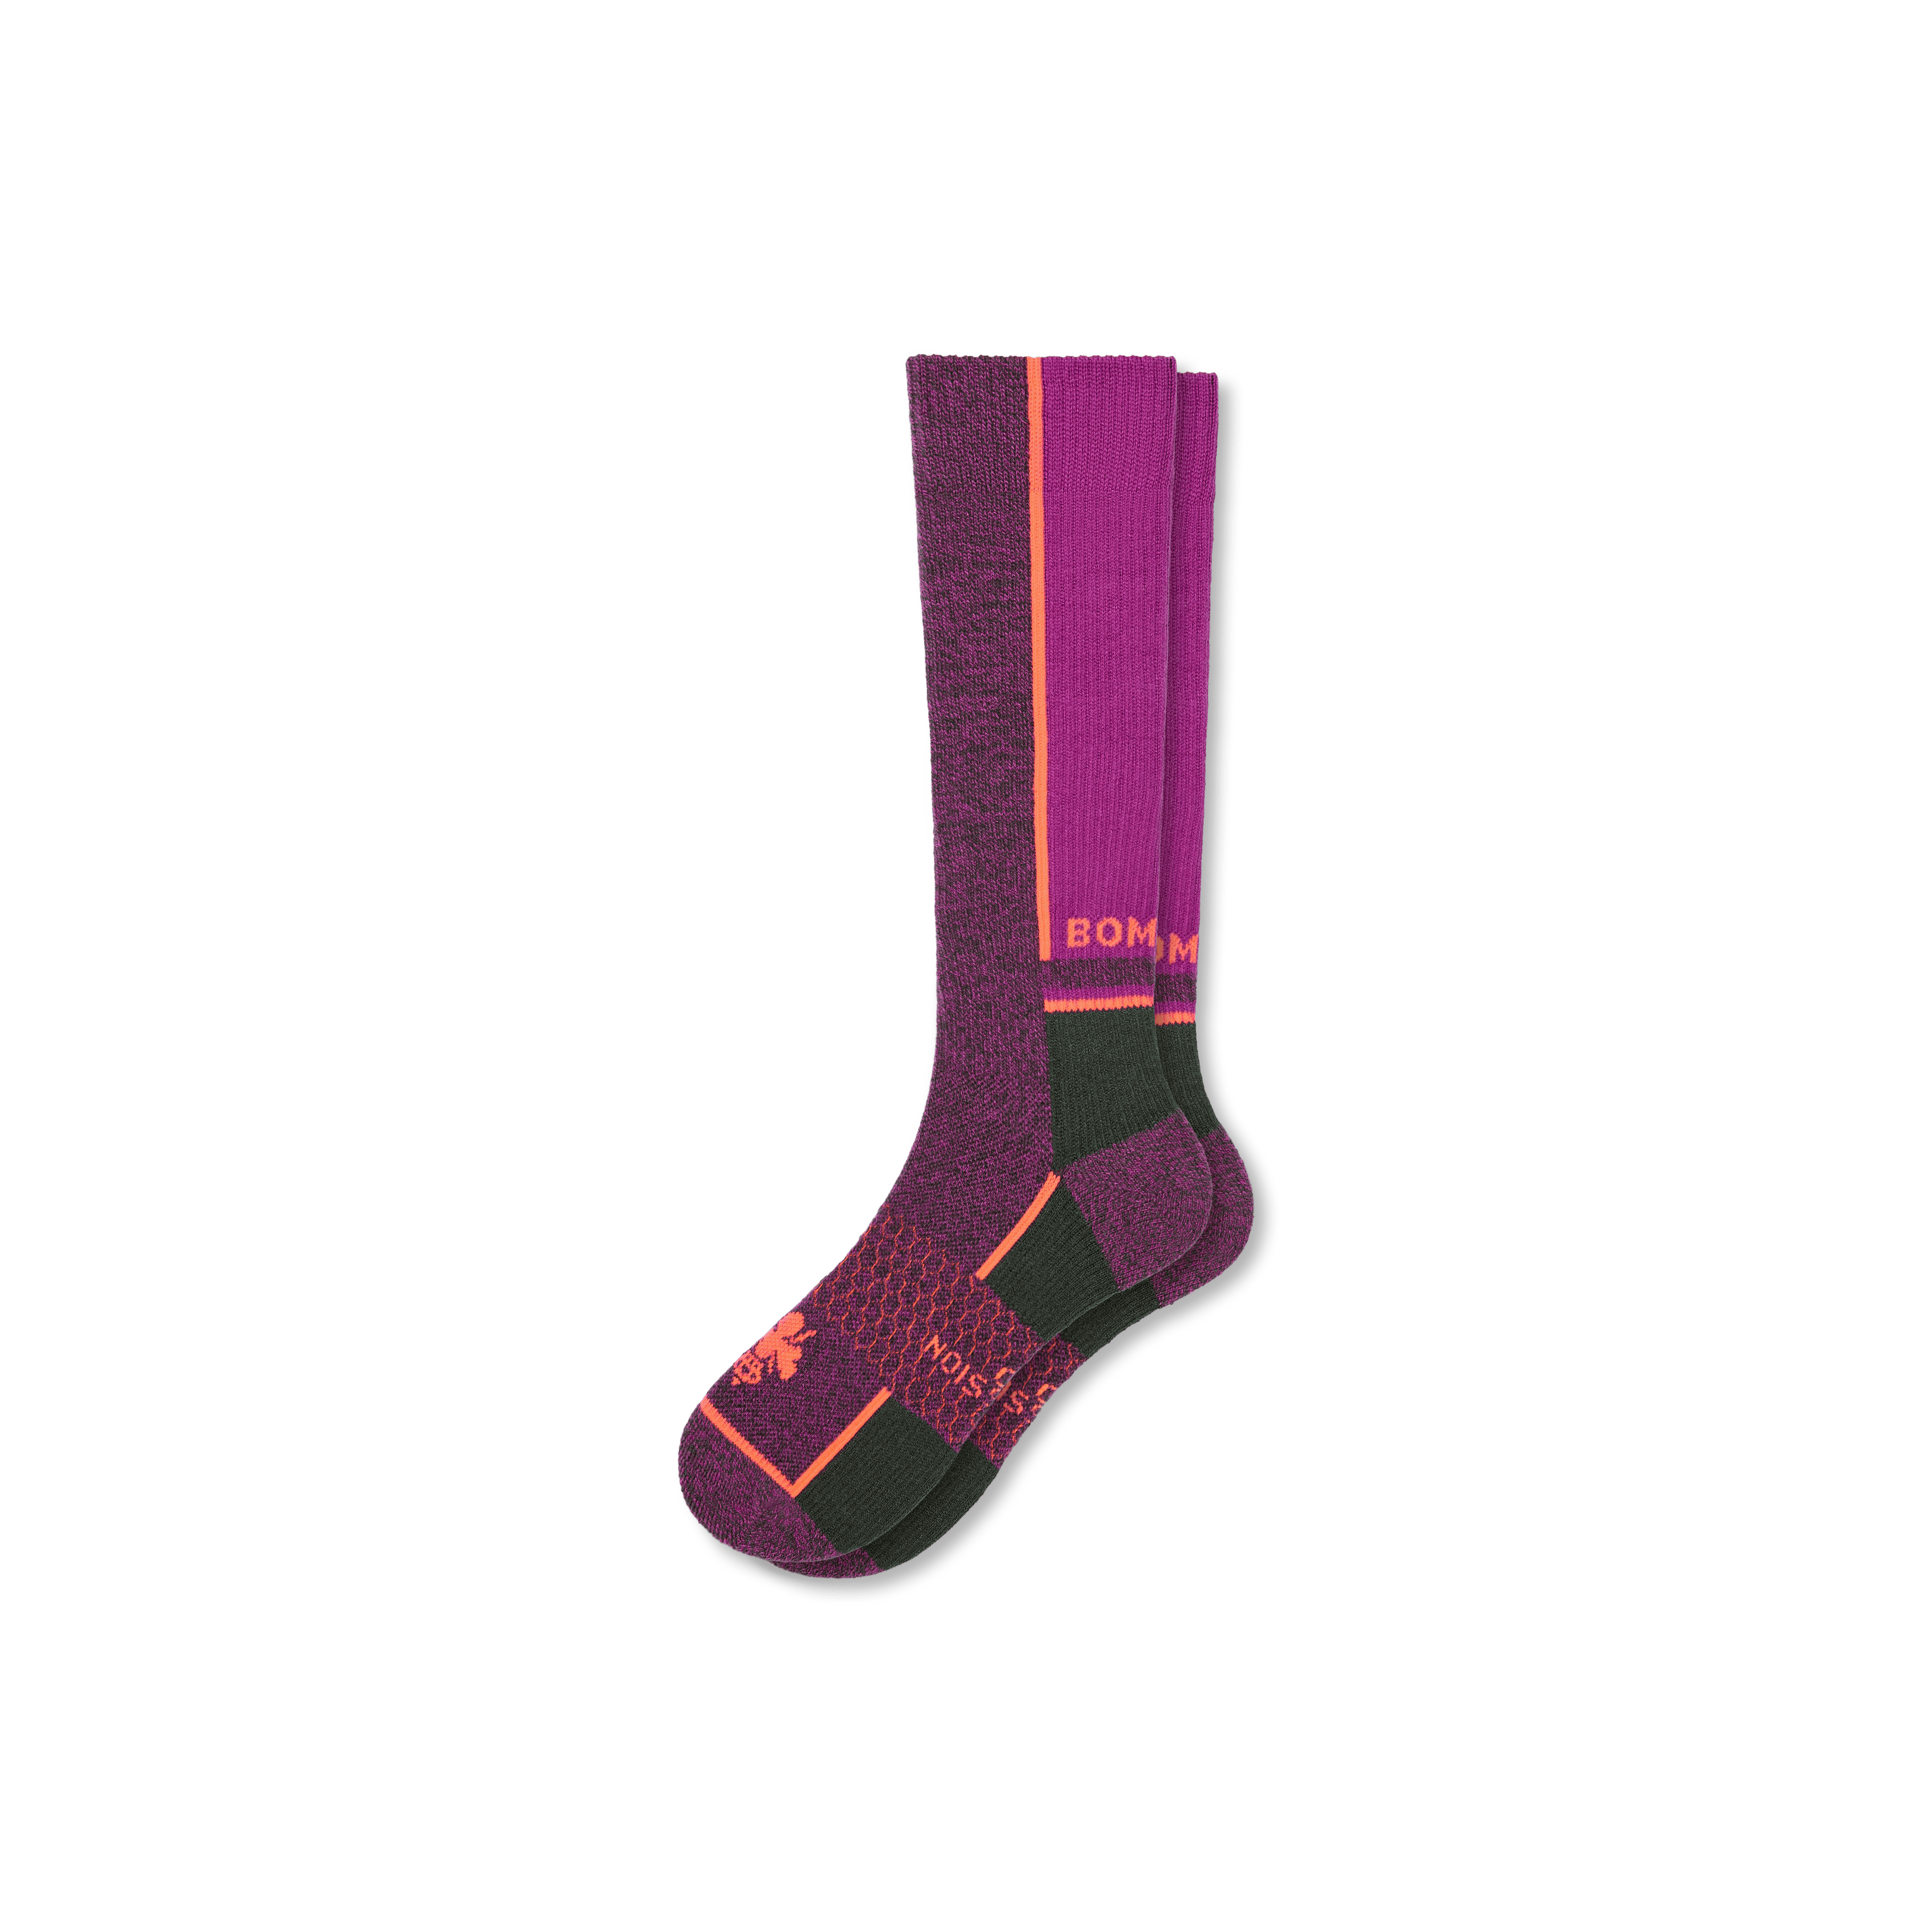 Bombas Performance Compression Socks (20-30mmhg) In Purple